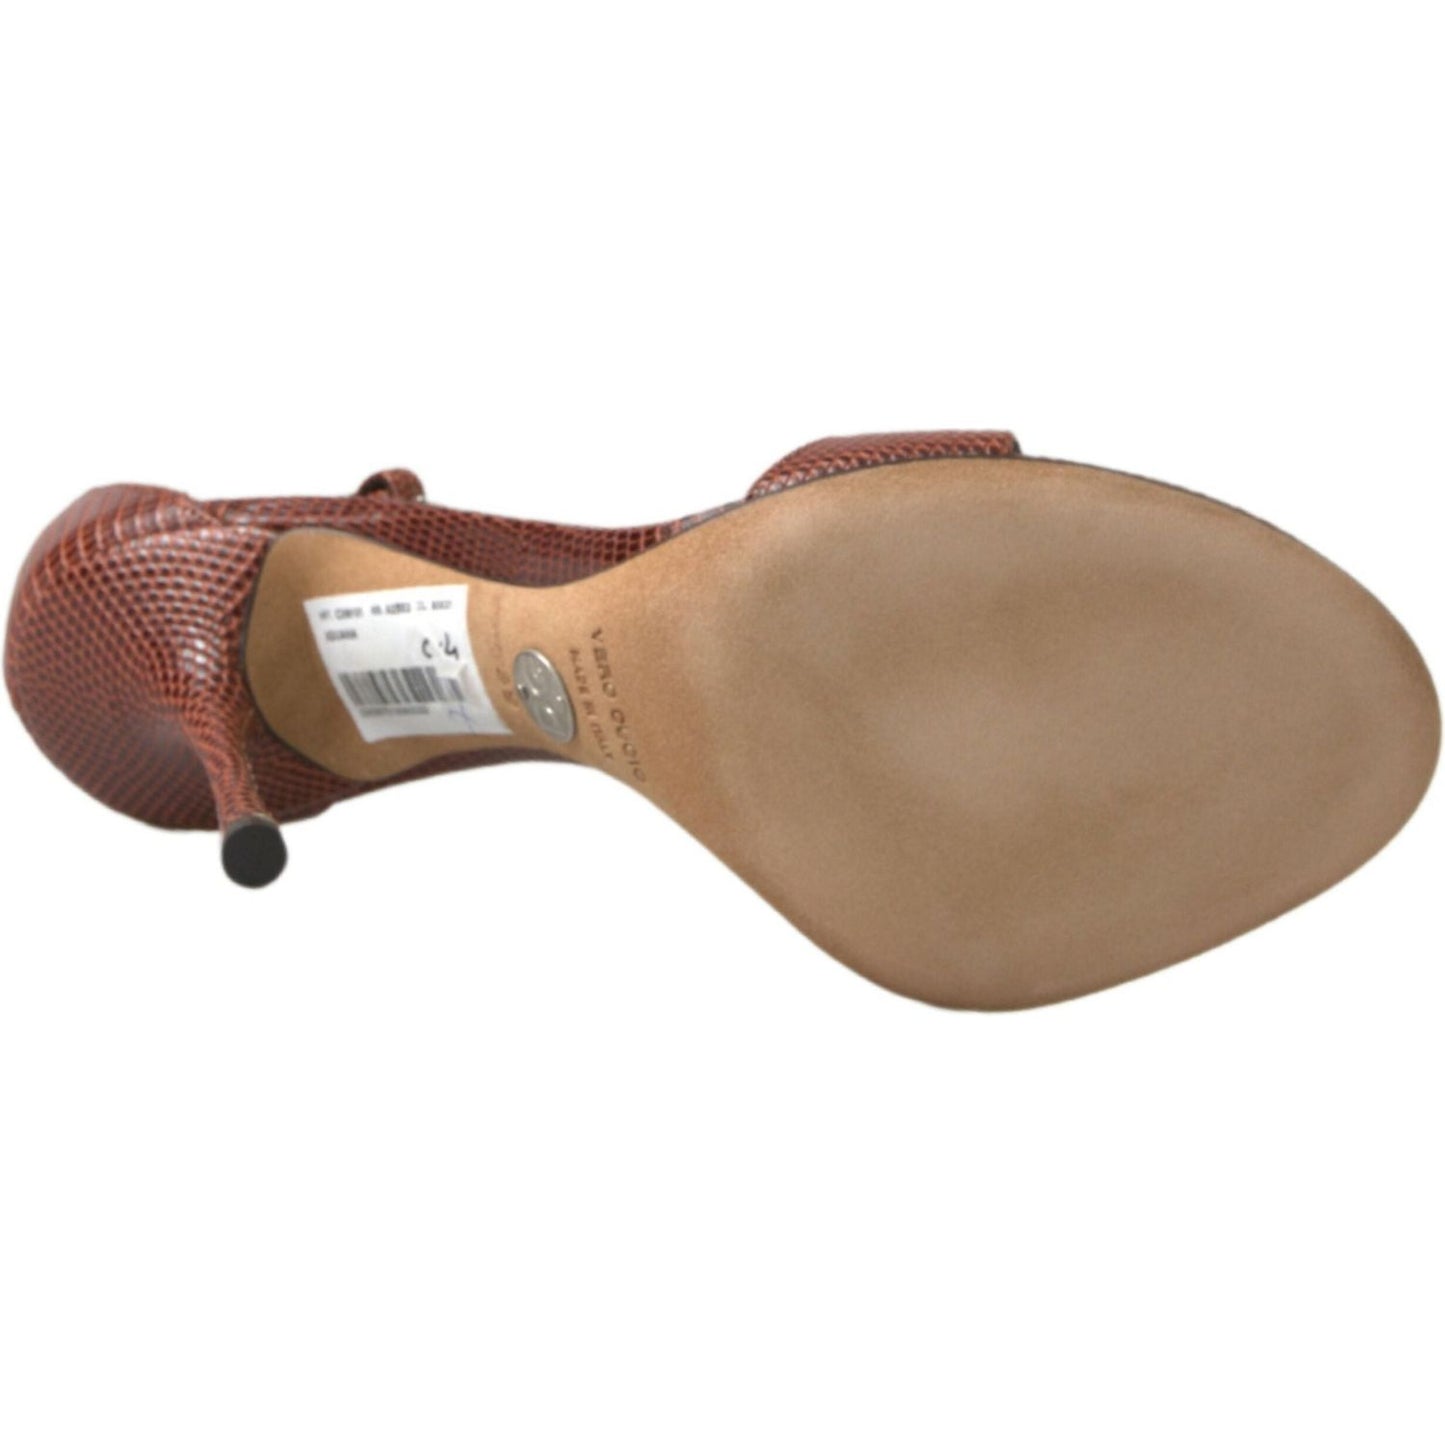 Dolce & Gabbana Elegant Strappy Leather Heels Sandals brown-leather-high-heels-sandals-shoes